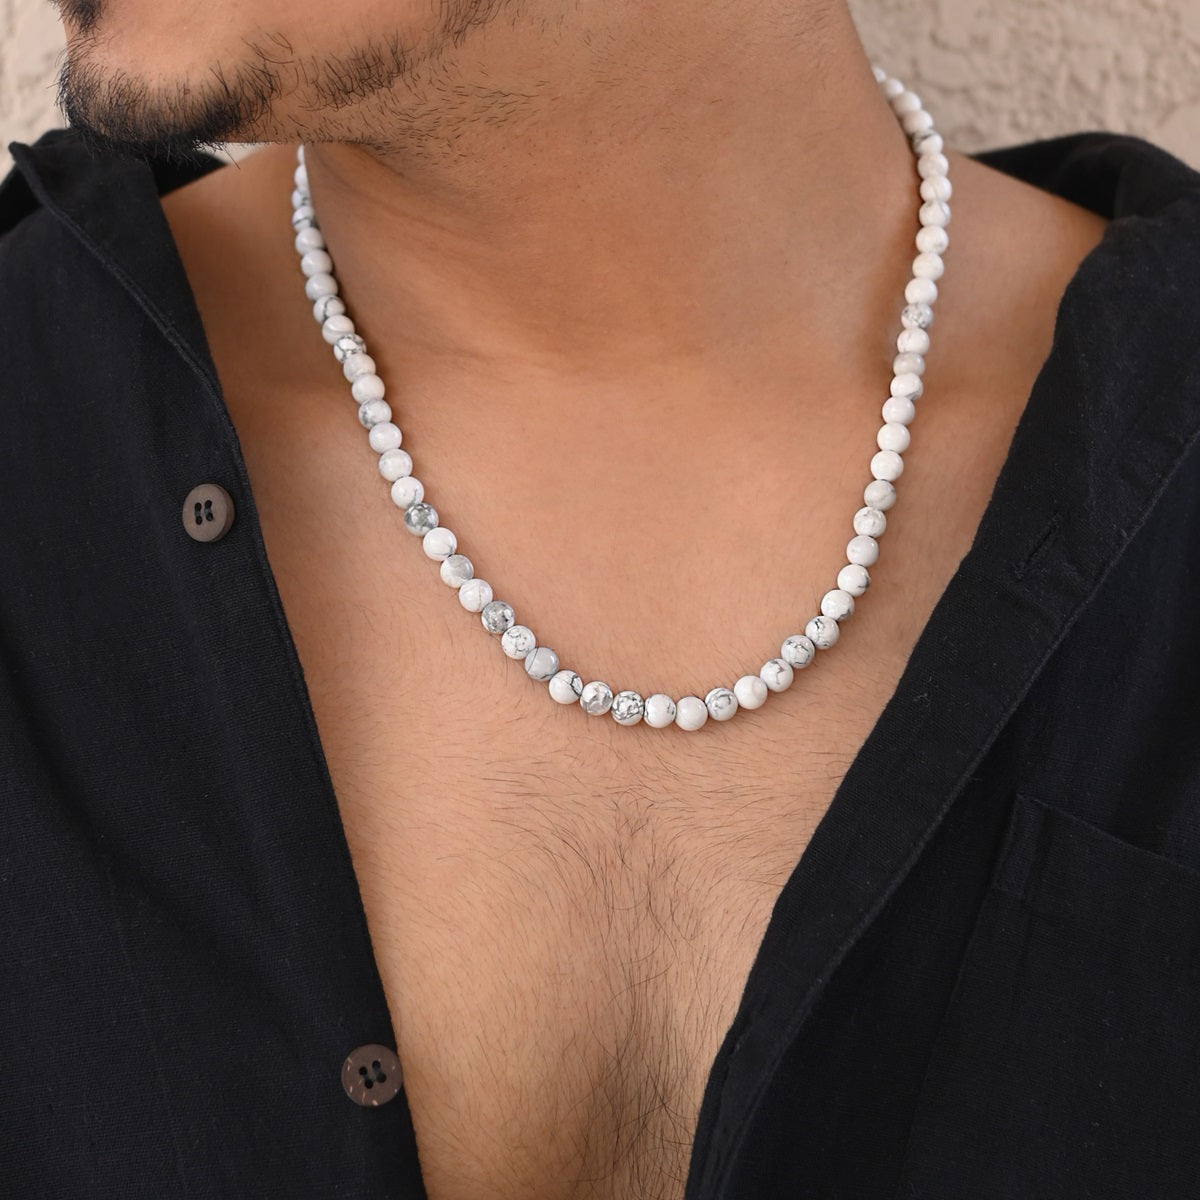 Men's Howlite Gemstone Silver Necklace: Smooth round beads with silver lock